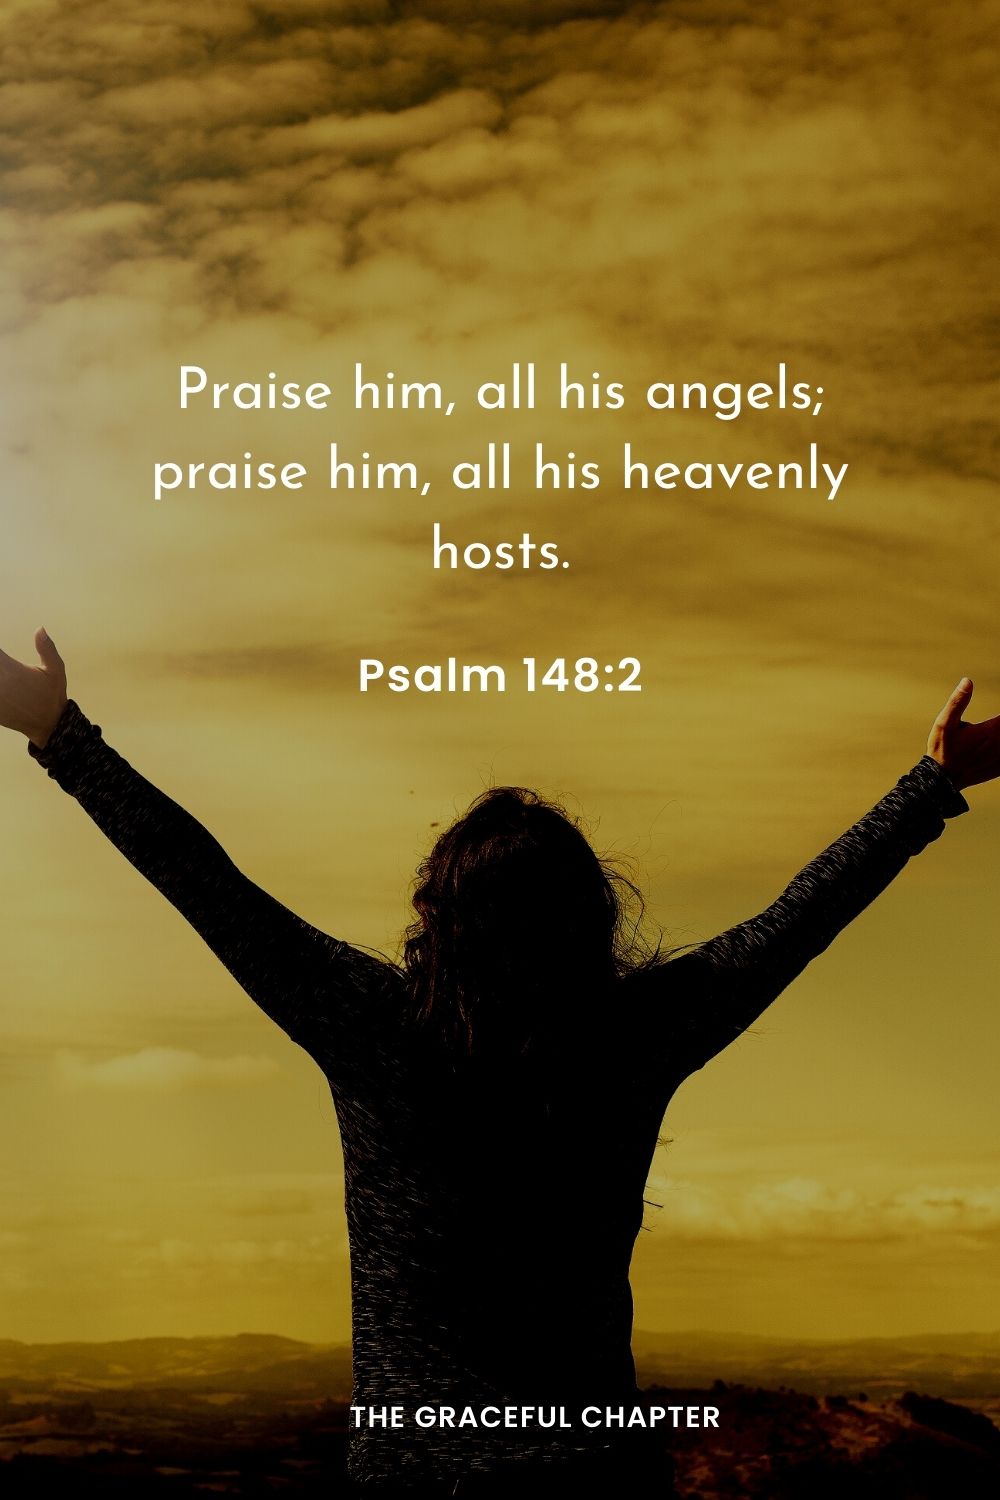 Praise him, all his angels; praise him, all his heavenly hosts.